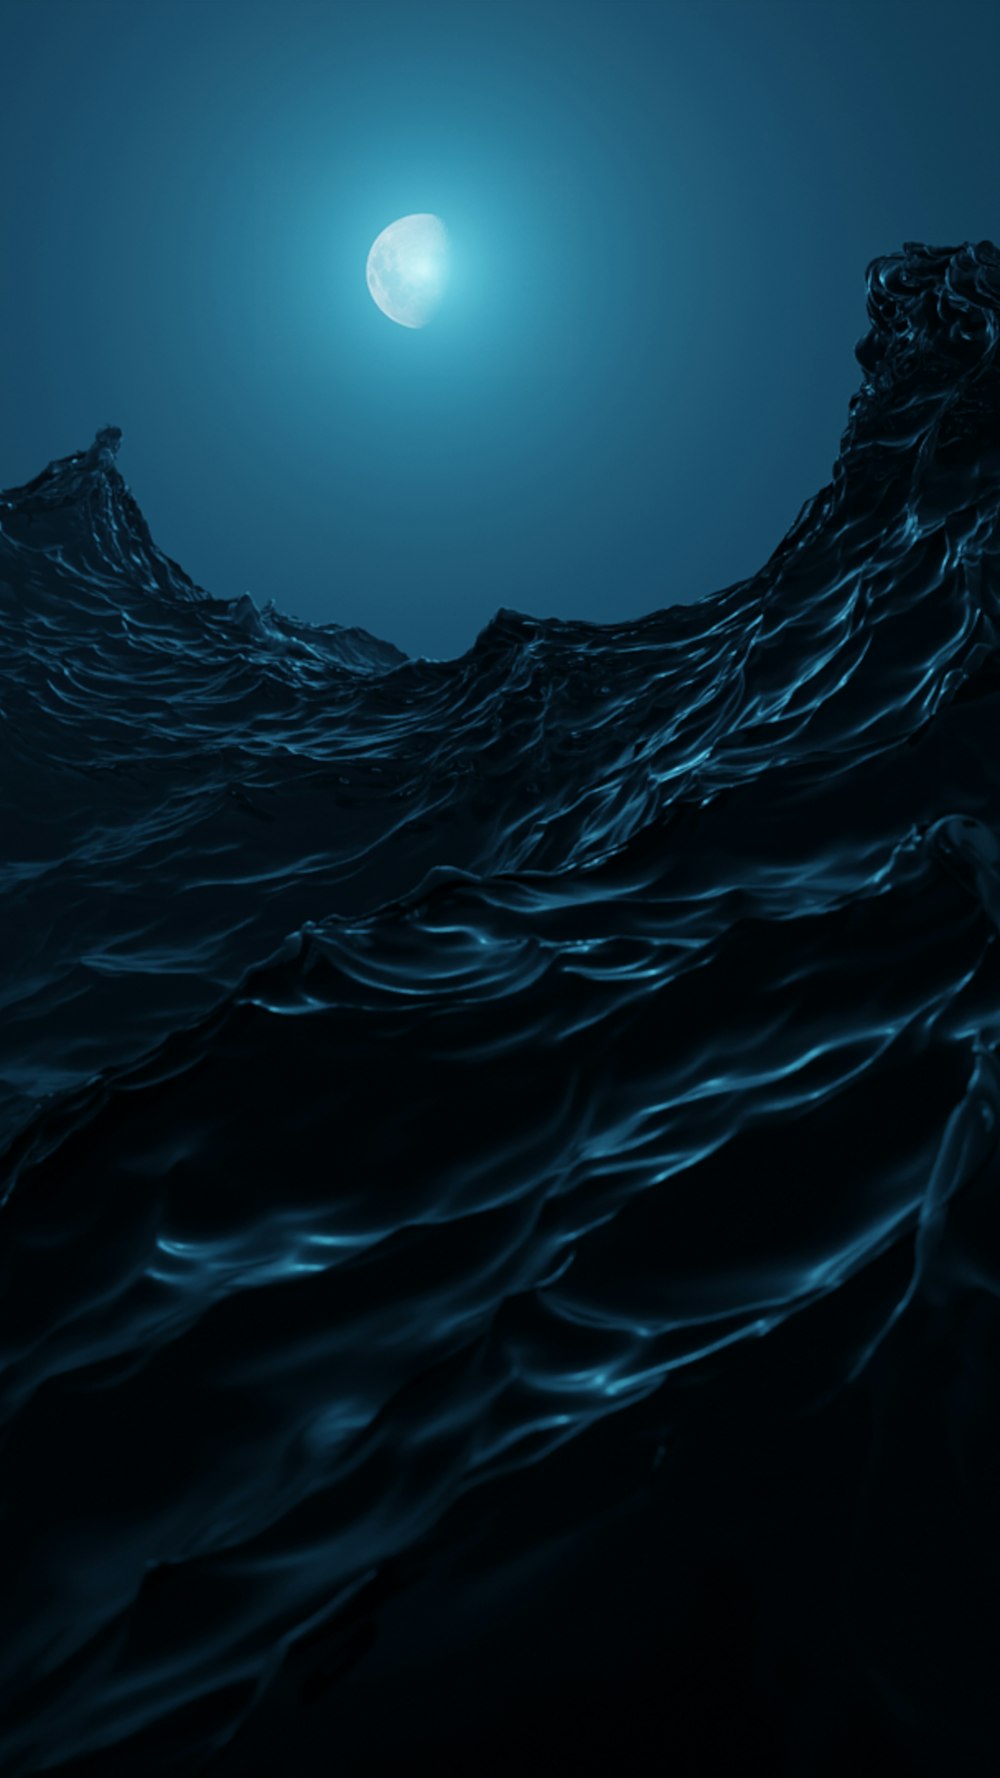 a dark blue ocean with a moon in the sky